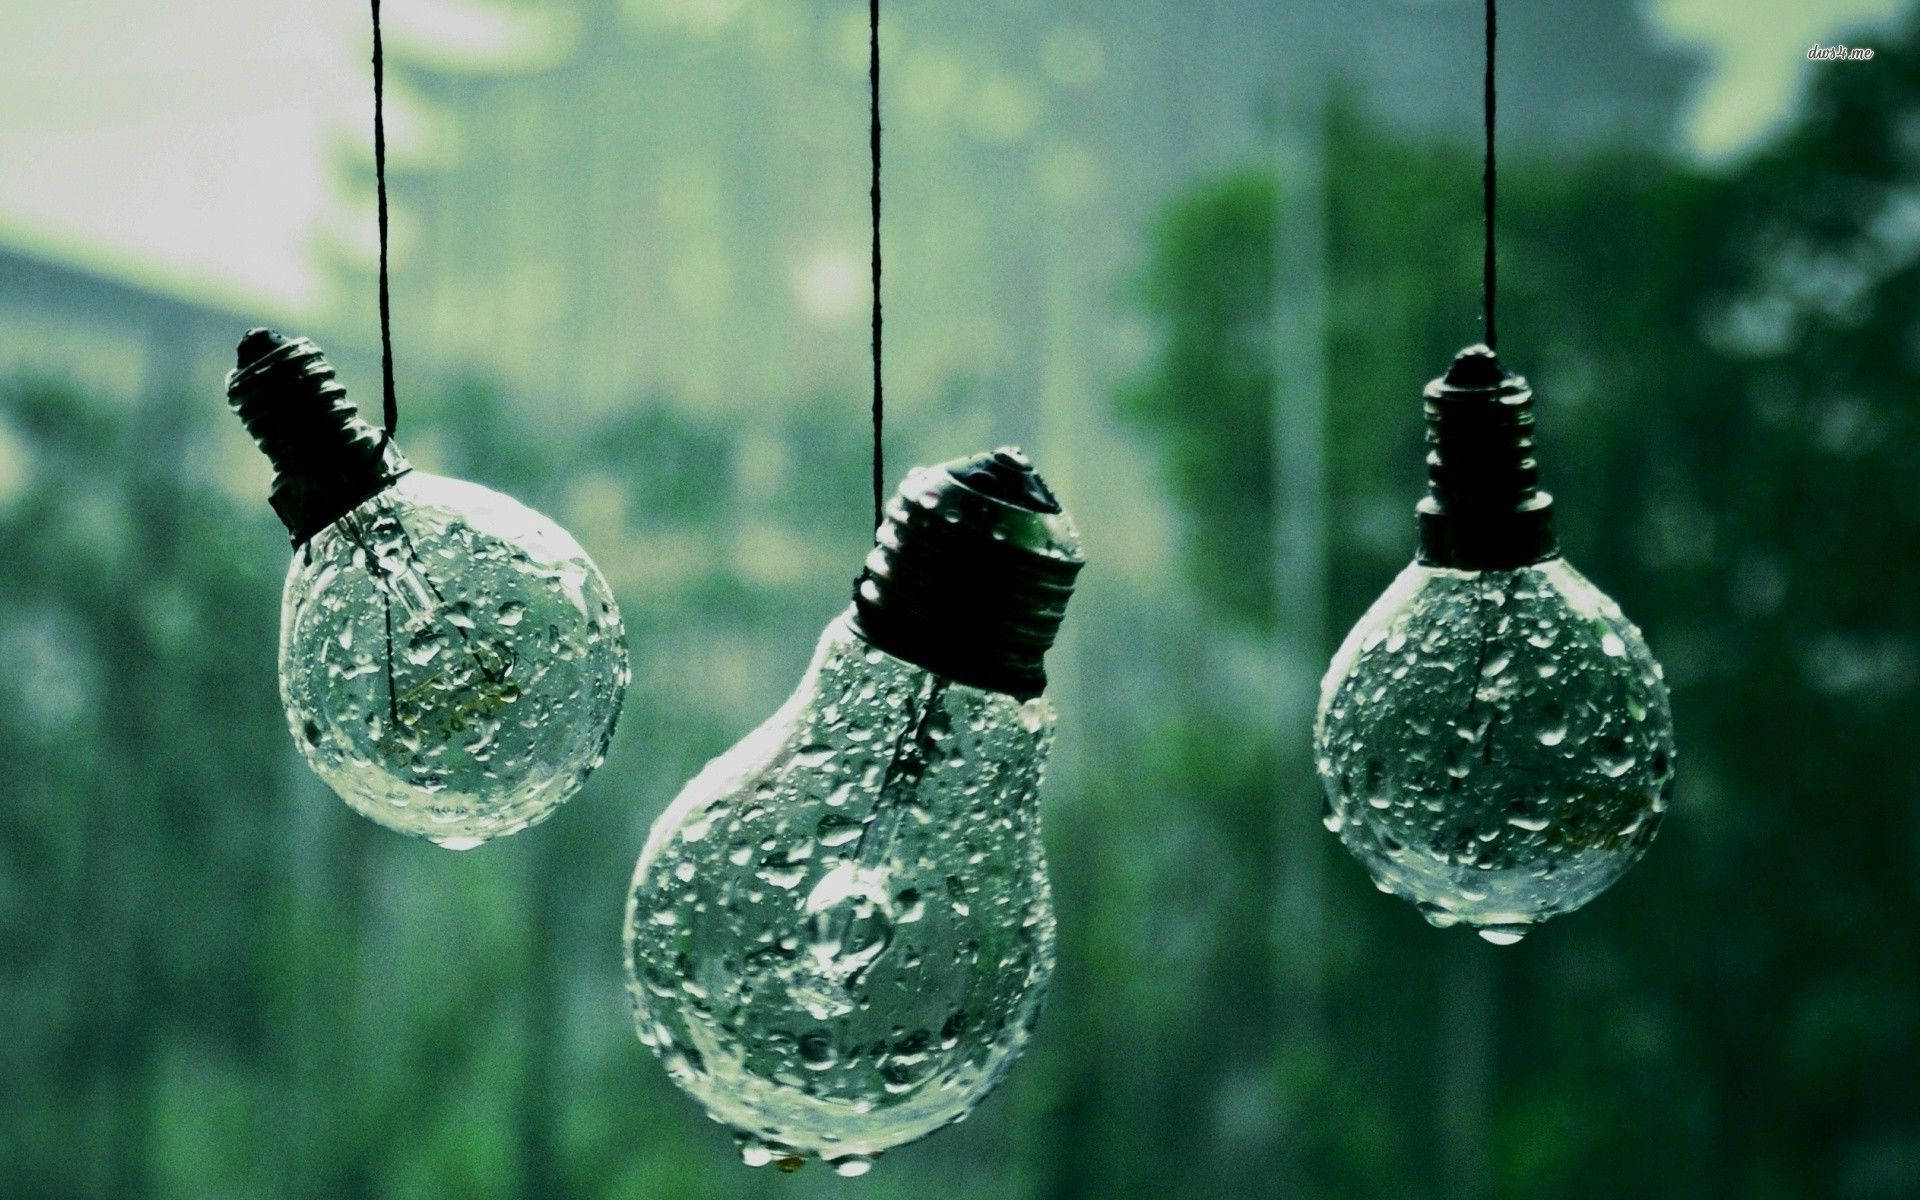 Hd Photography Of Wet Bulb Lights